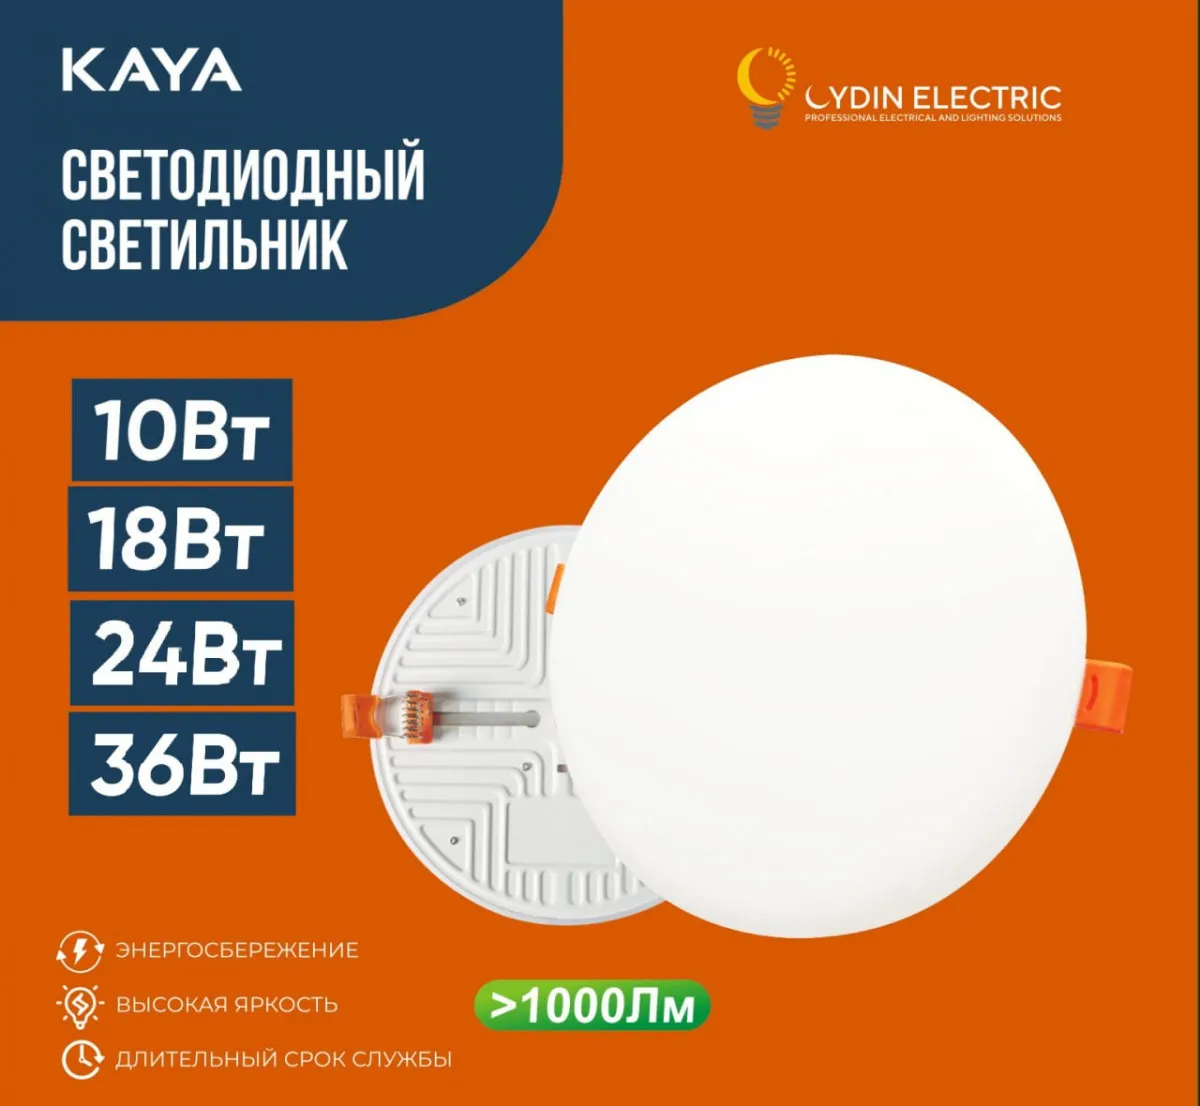 Акриловая панель Kaya 36 Вт (R) 6500K Oydin Electric круглая#1